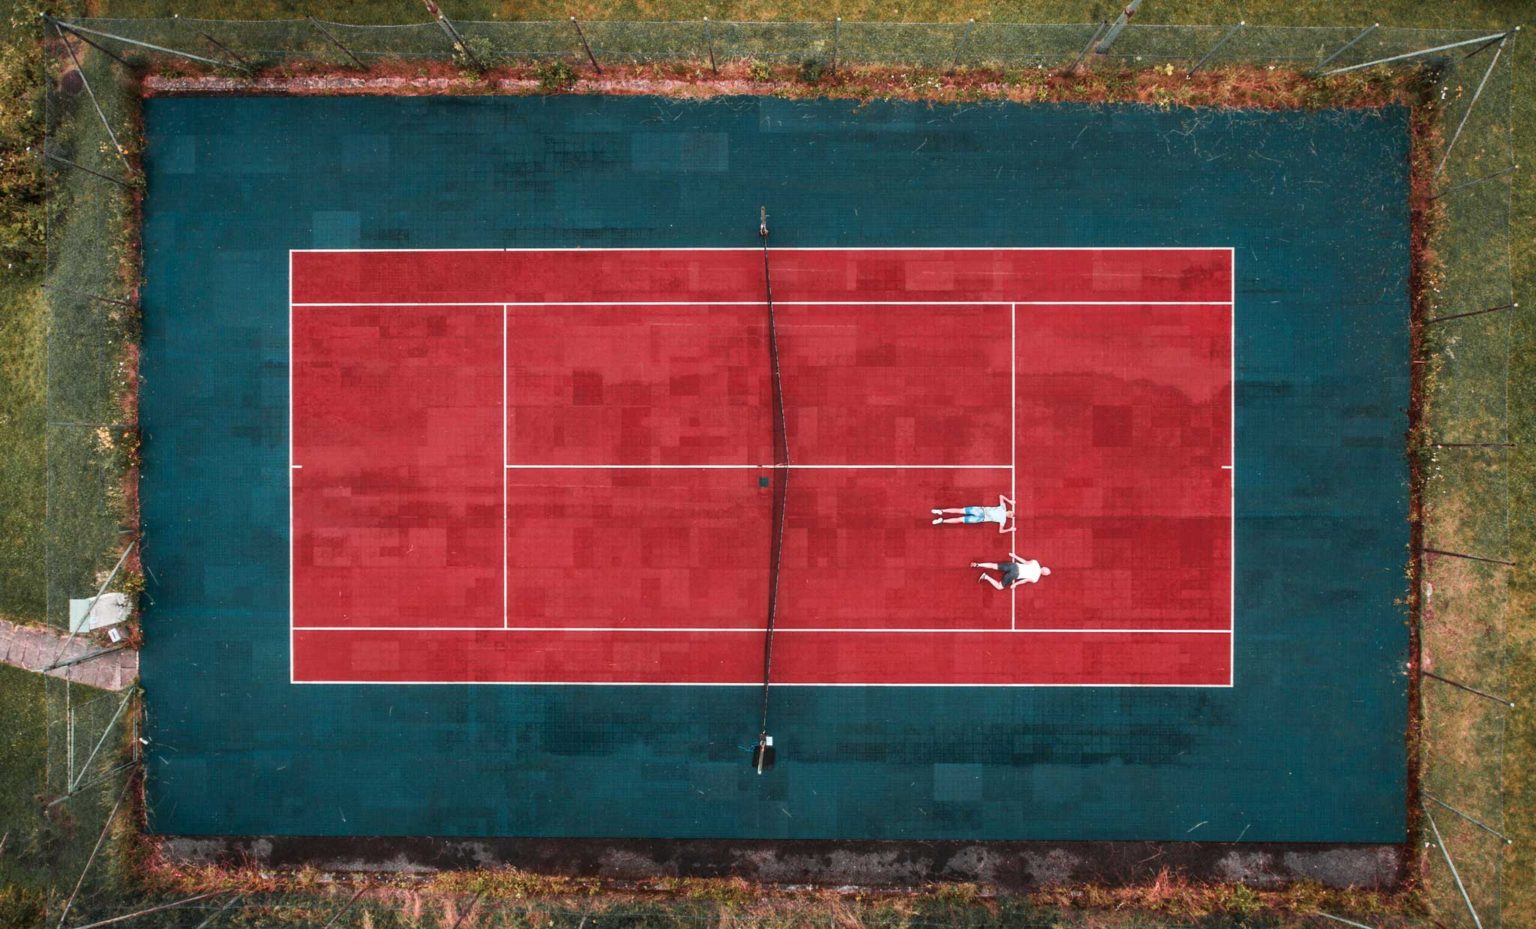 Tennis Court Dimensions - How Big is a Tennis Court? - Tennis Creative